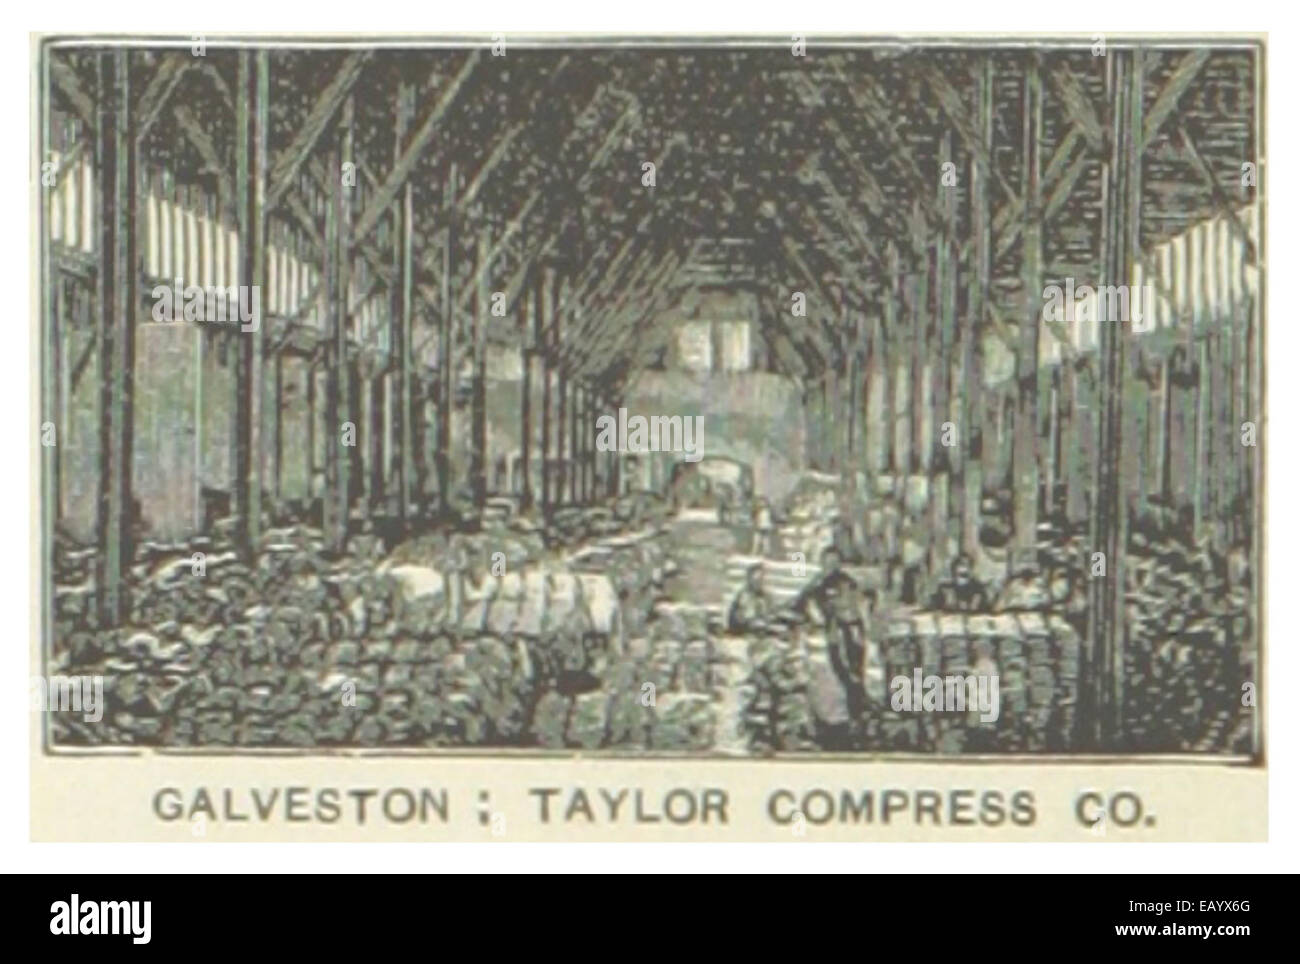 US-TX(1891) p832 GALVESTON, TAYLOR COMPRESS CO., STORAGE BUILDING Stock Photo